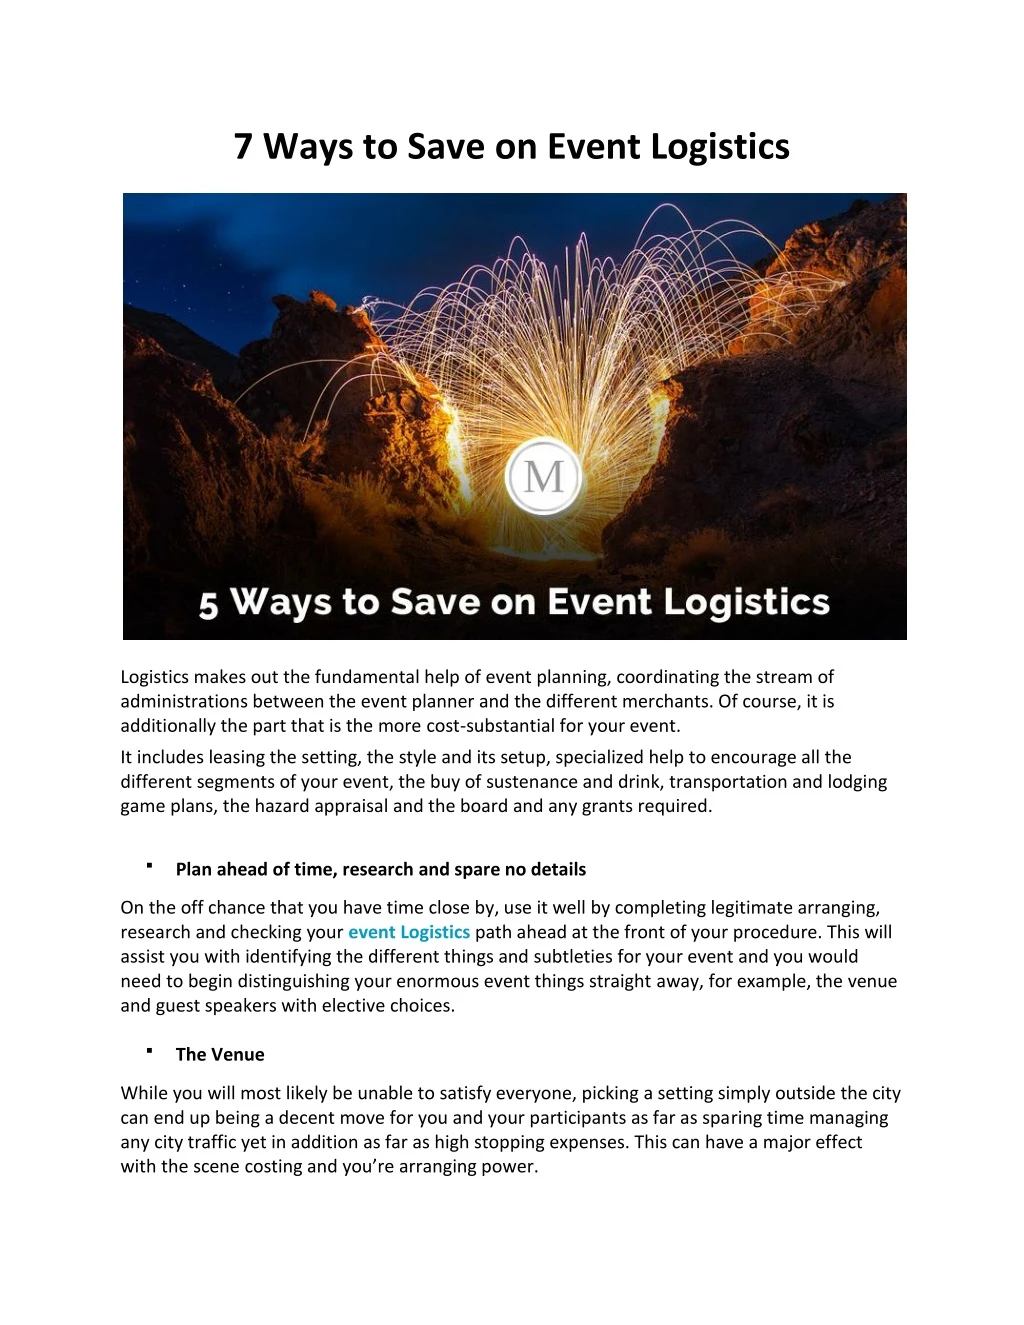 7 ways to save on event logistics